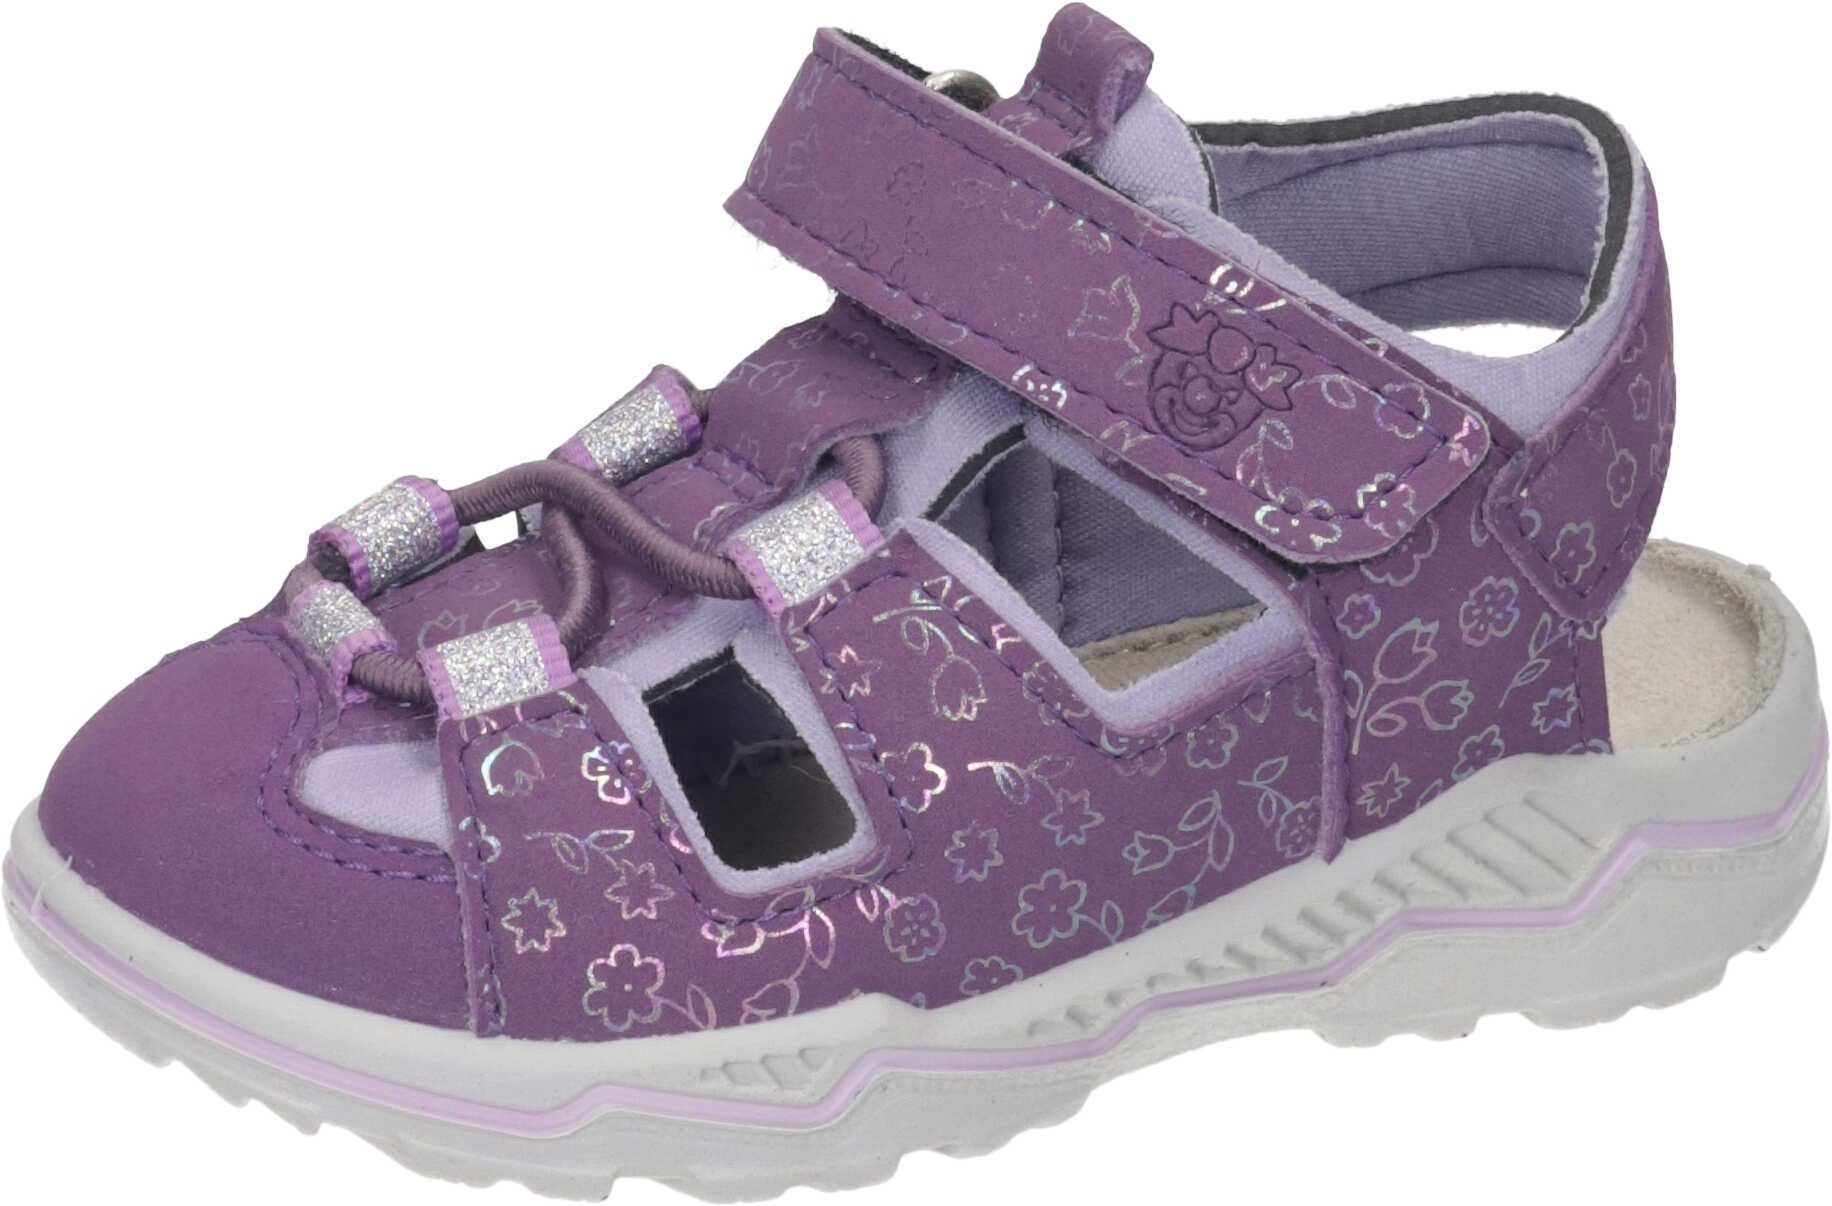 Pepino aus Synthetik/Textil Outdoorsandale Sandaletten Cassis/Lavendel